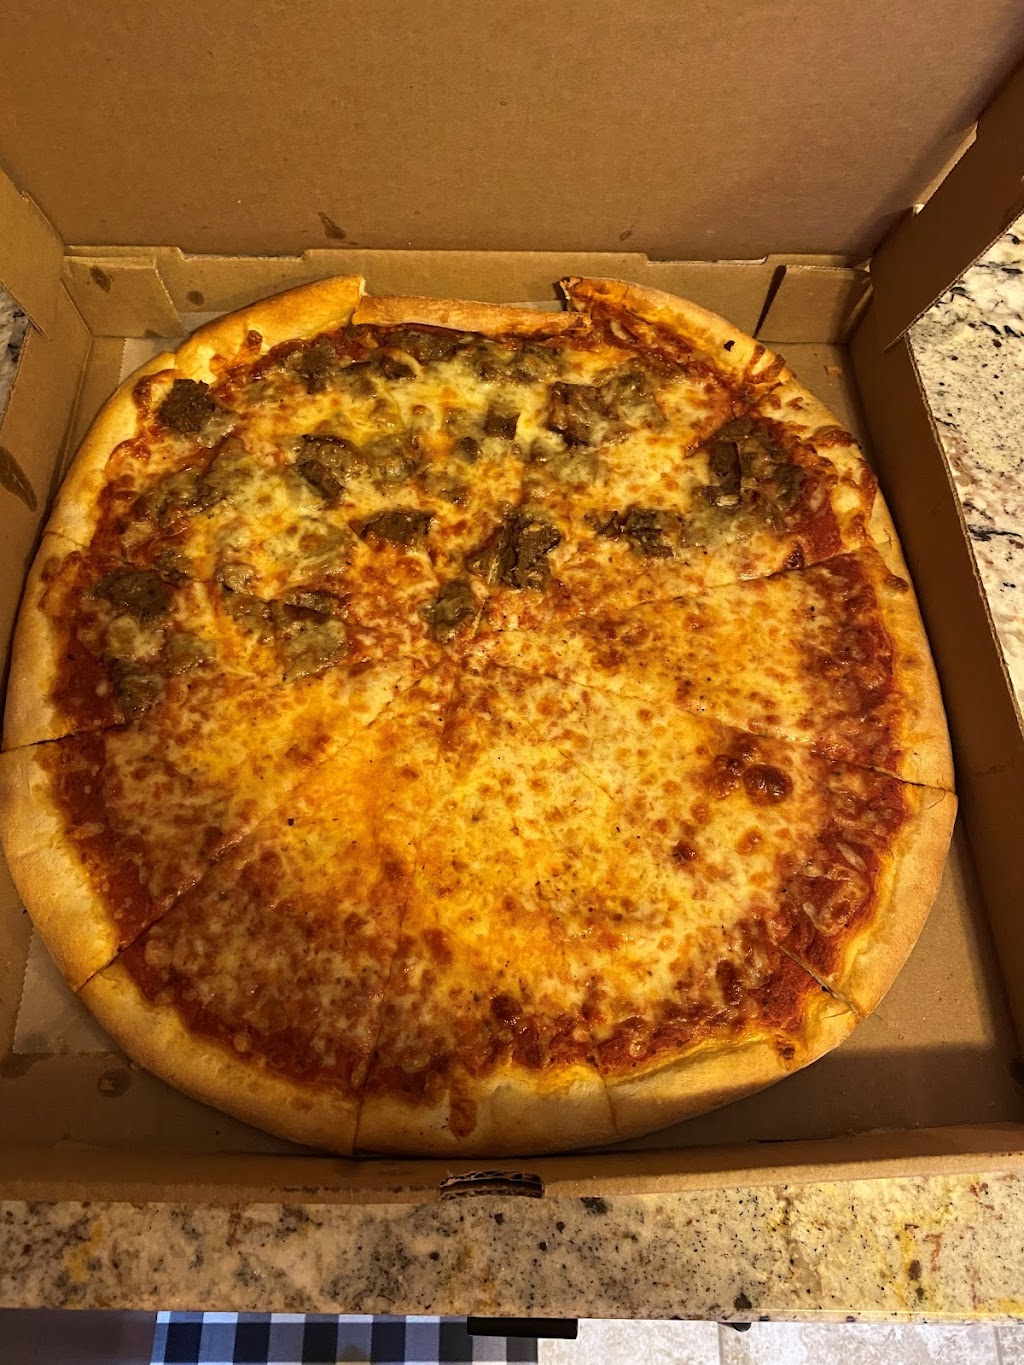 Honeyspot Pizza 3 | 50 Main St, Branford, CT 06405 | Phone: (203) 483-0060